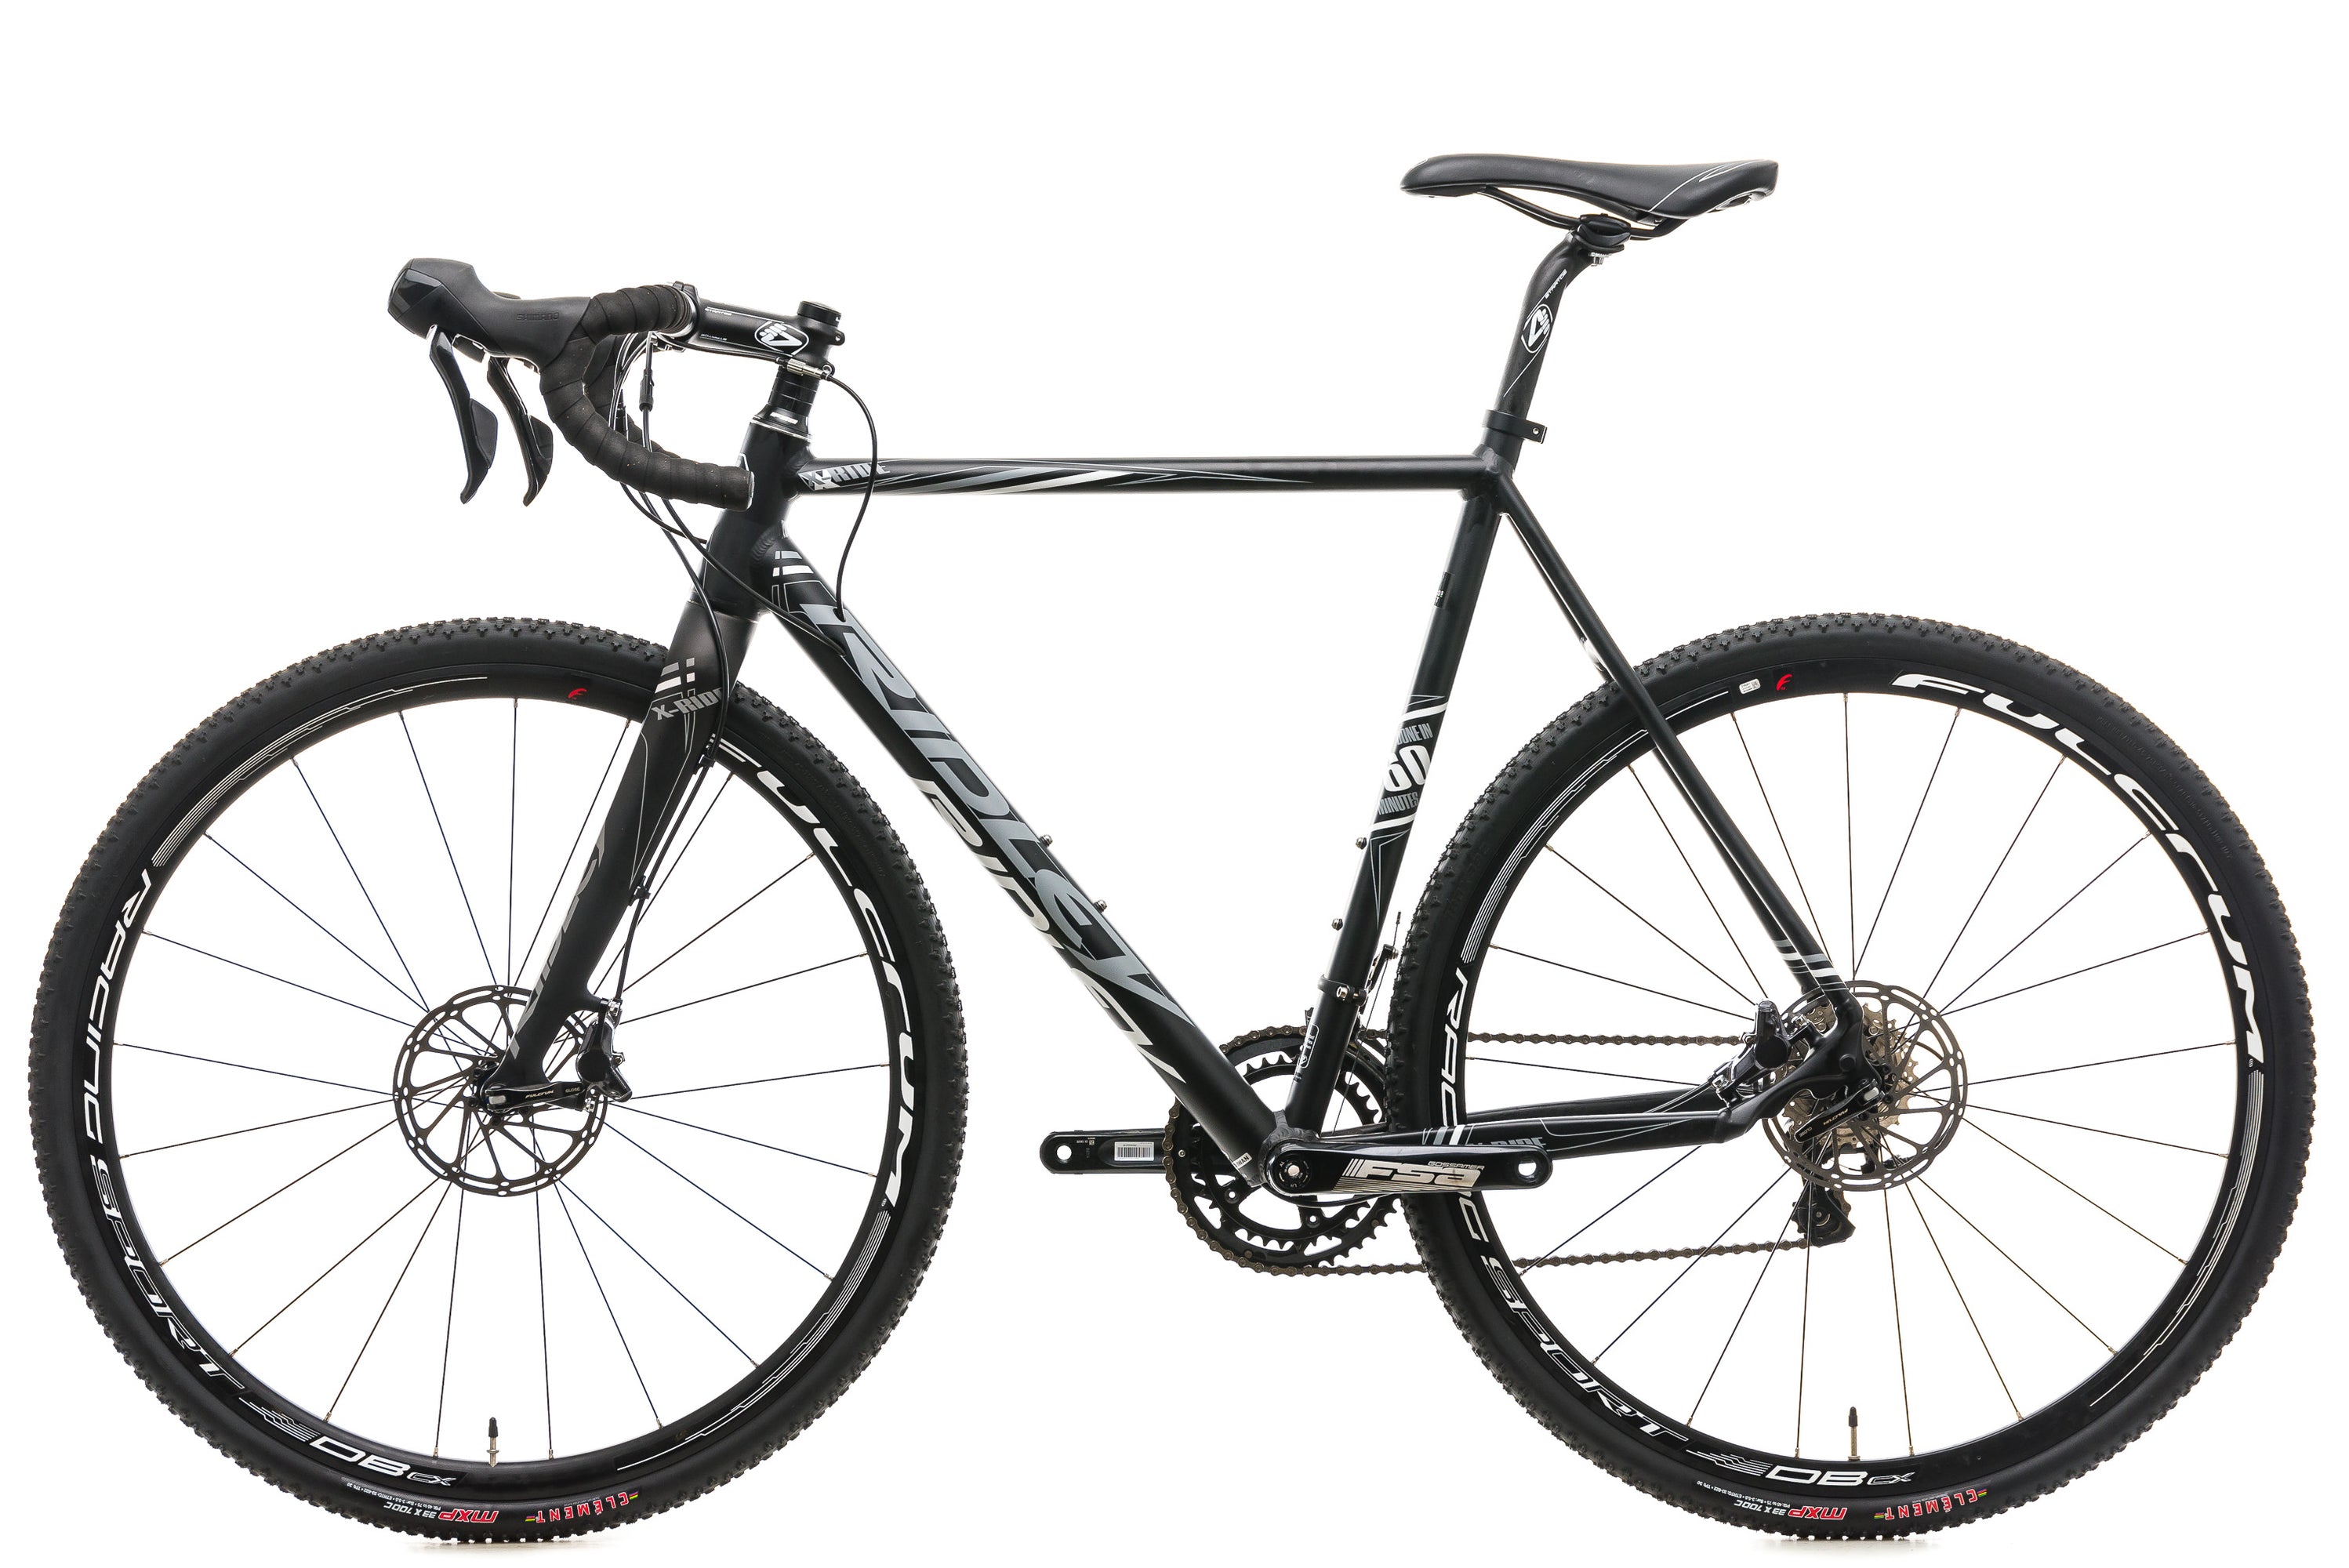 Ridley X-Ride 20 Disc Cyclocross Bike - 2016, 54cm non-drive side